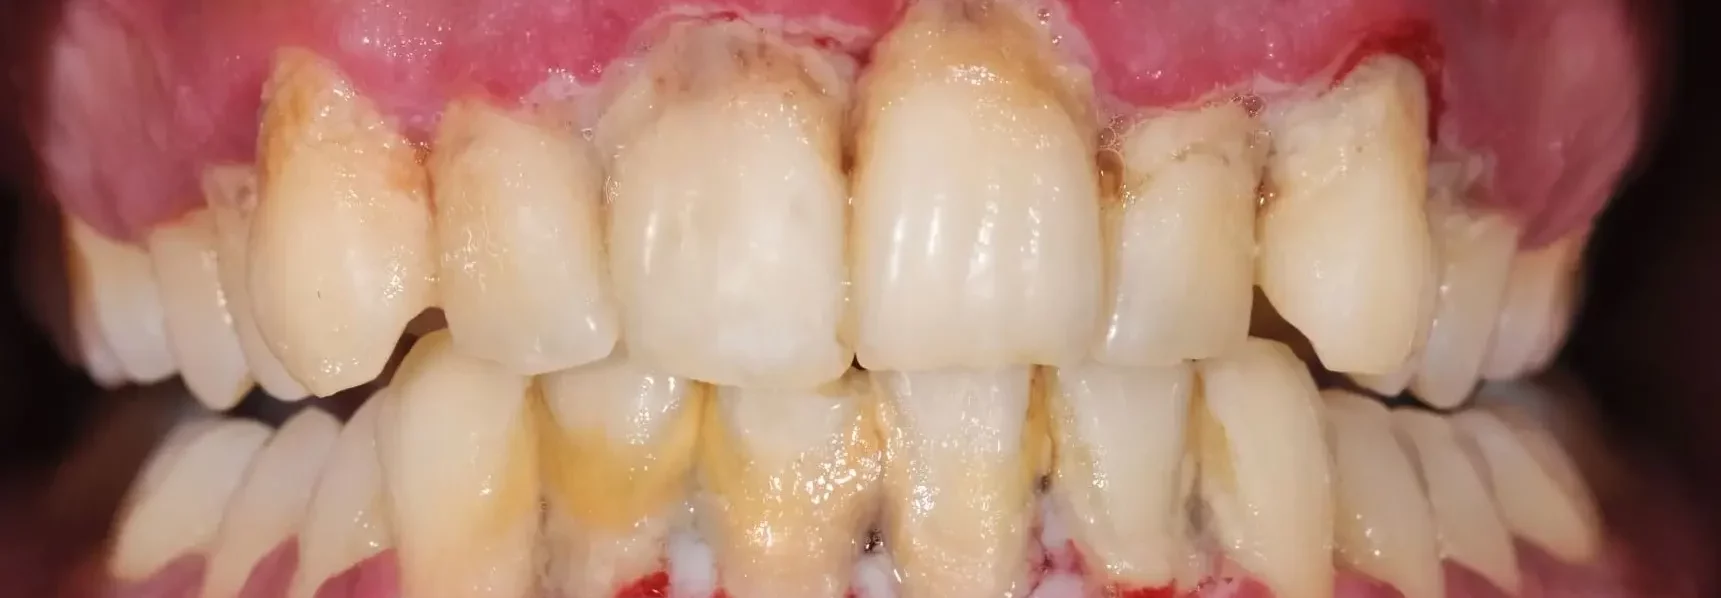 teeth-with-gingivitis